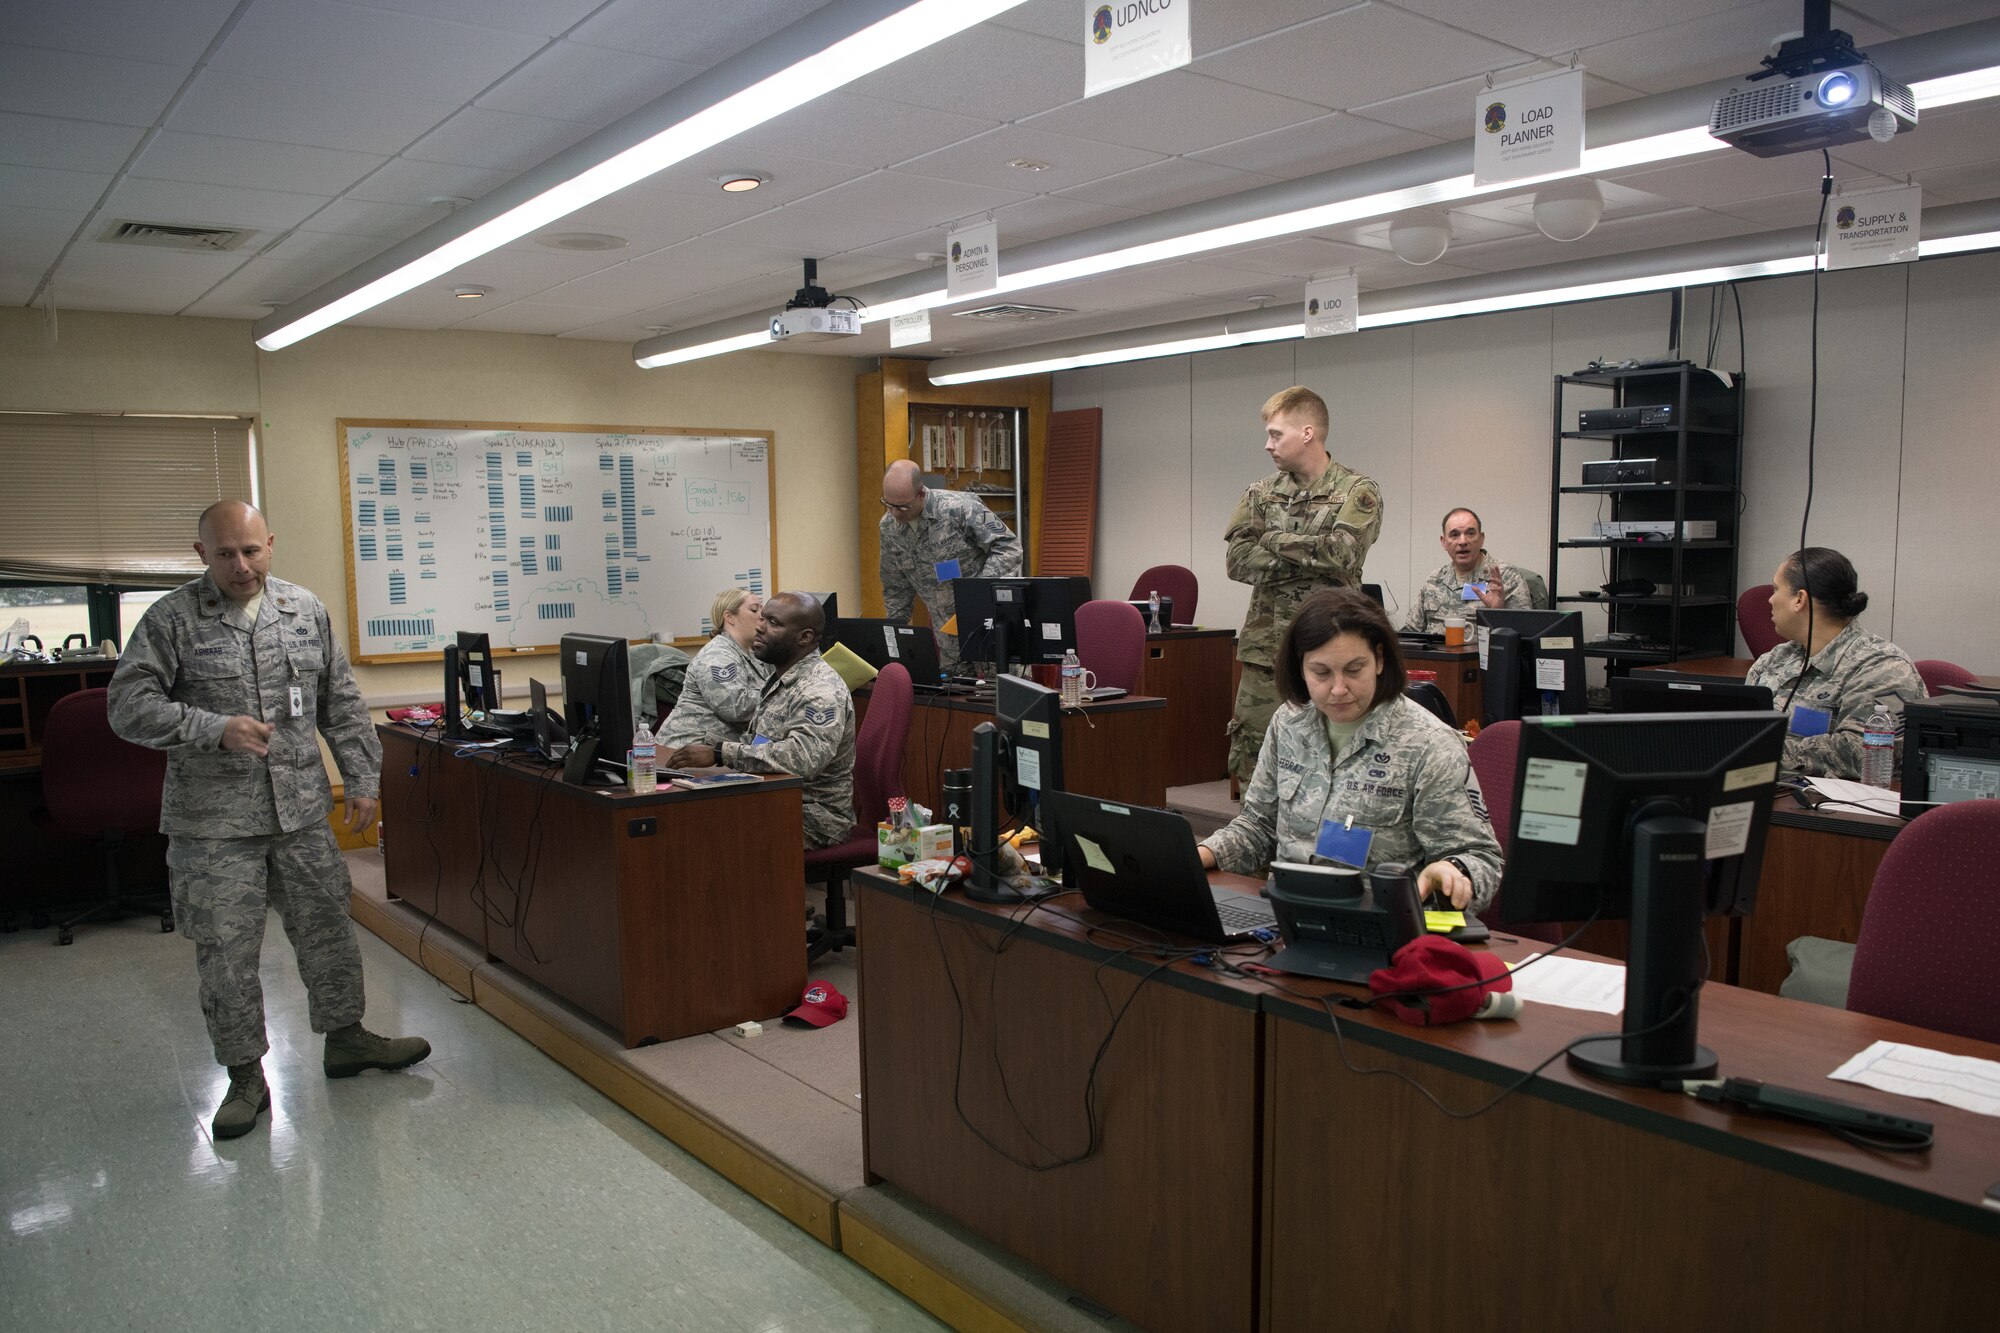 Airmen operate a command center